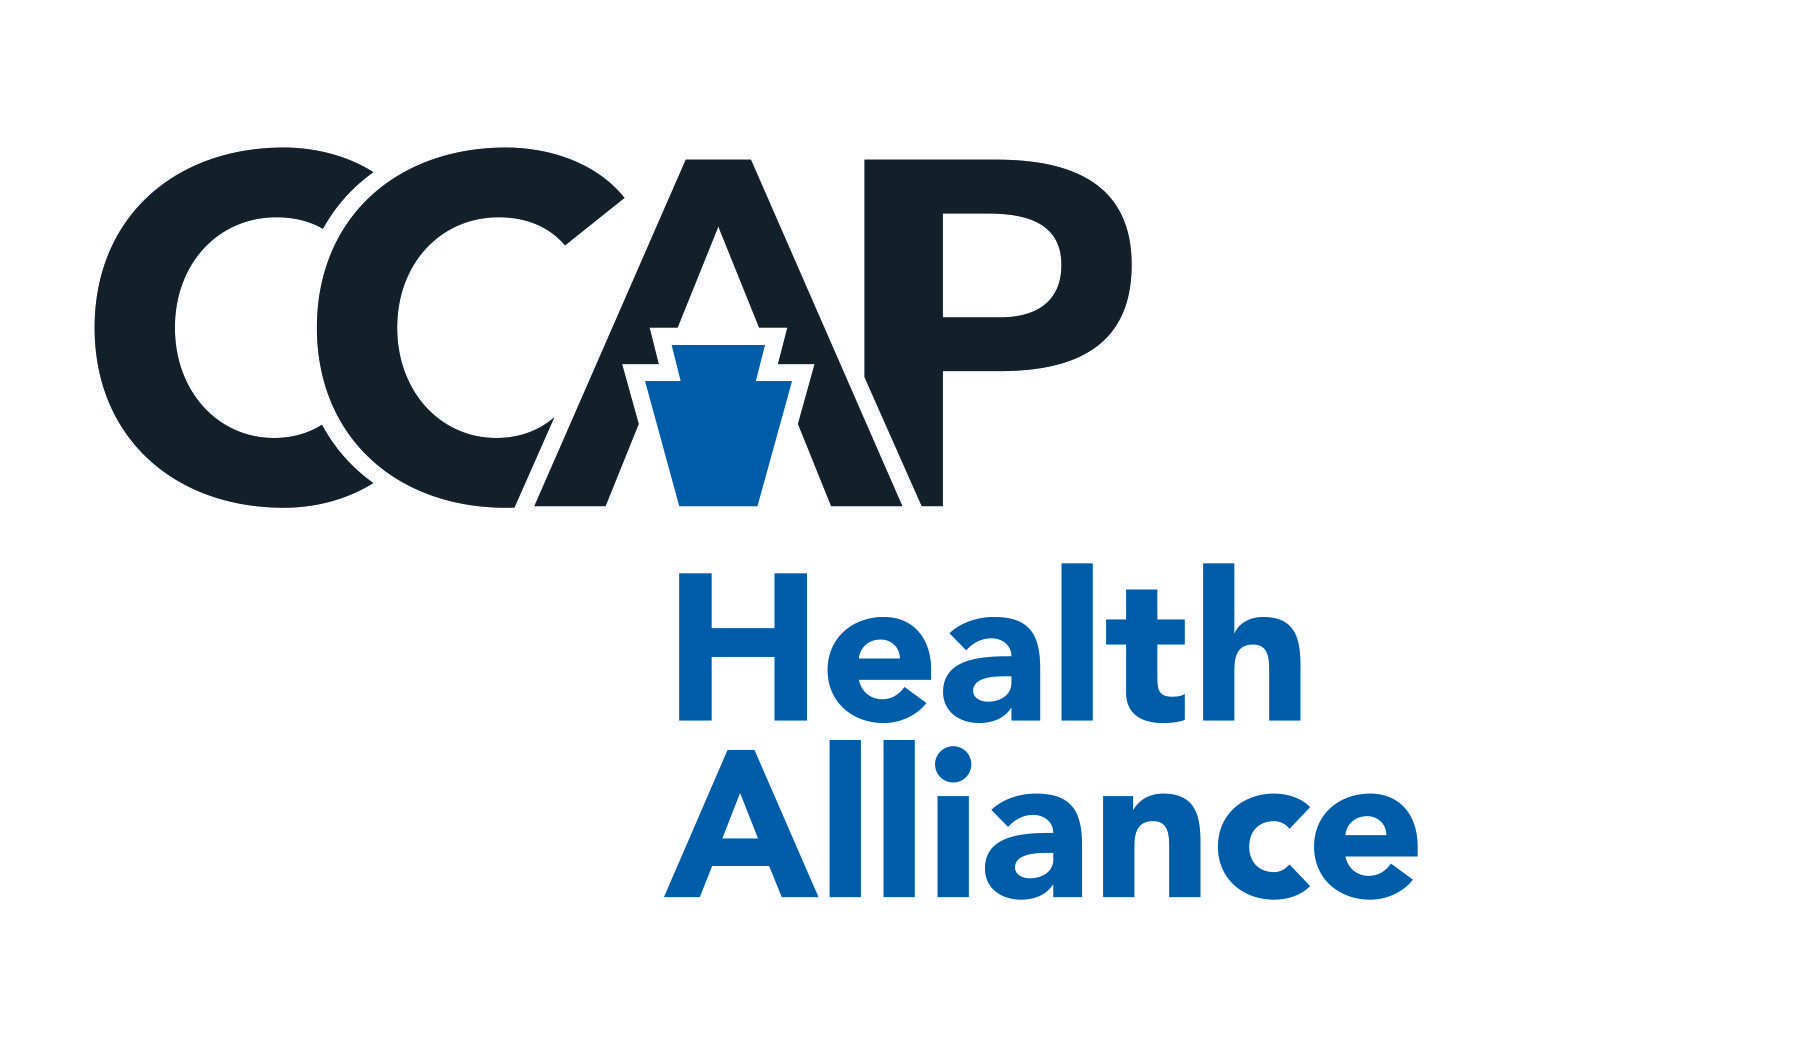 Cobra Insurance Logo - CCAP Health Alliance